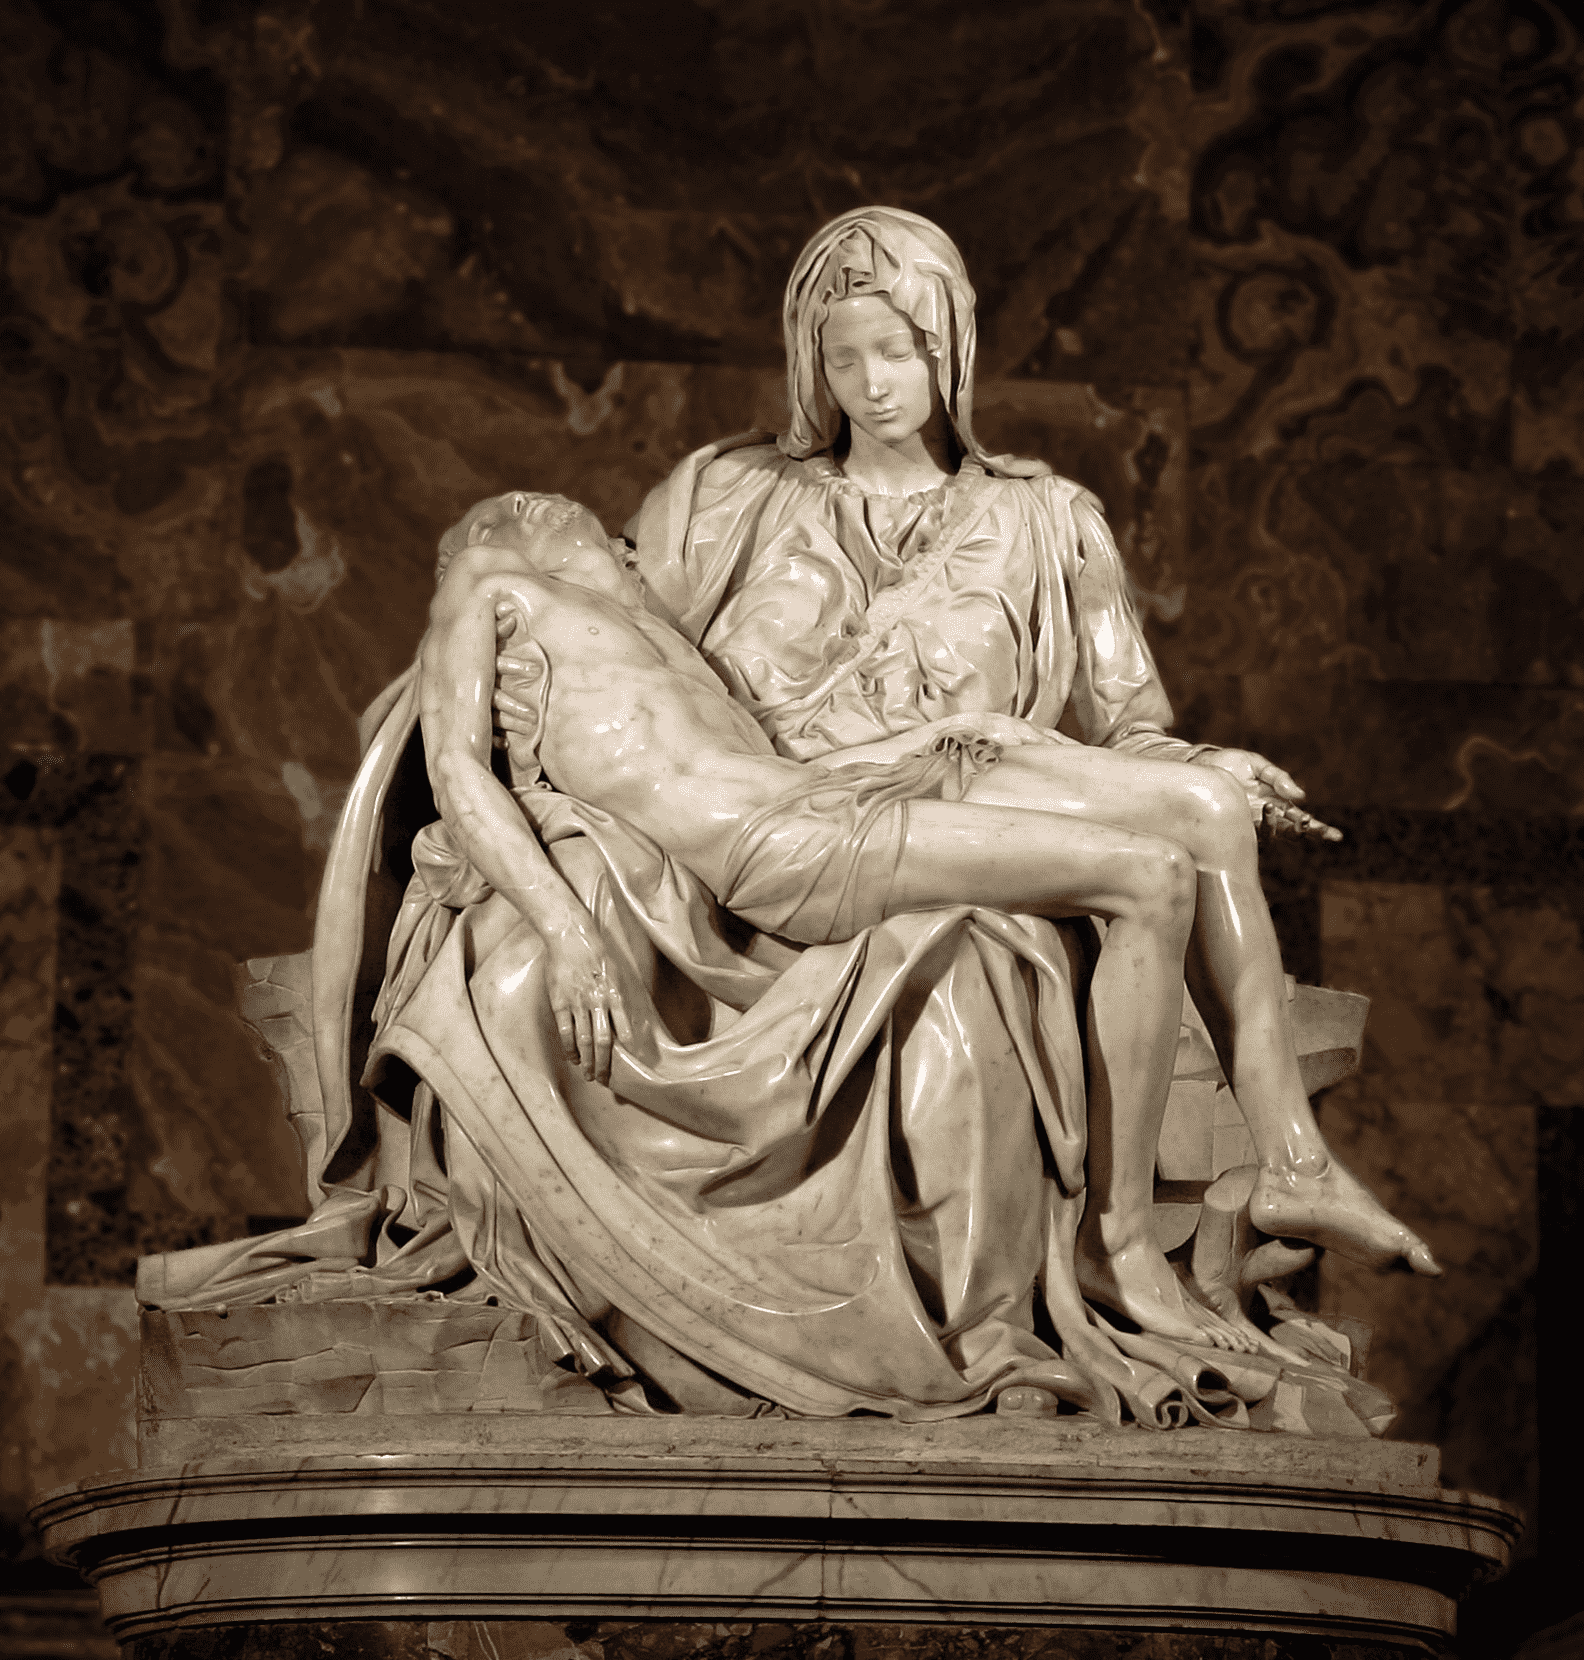 marble staue of the pieta by Michaelangelo